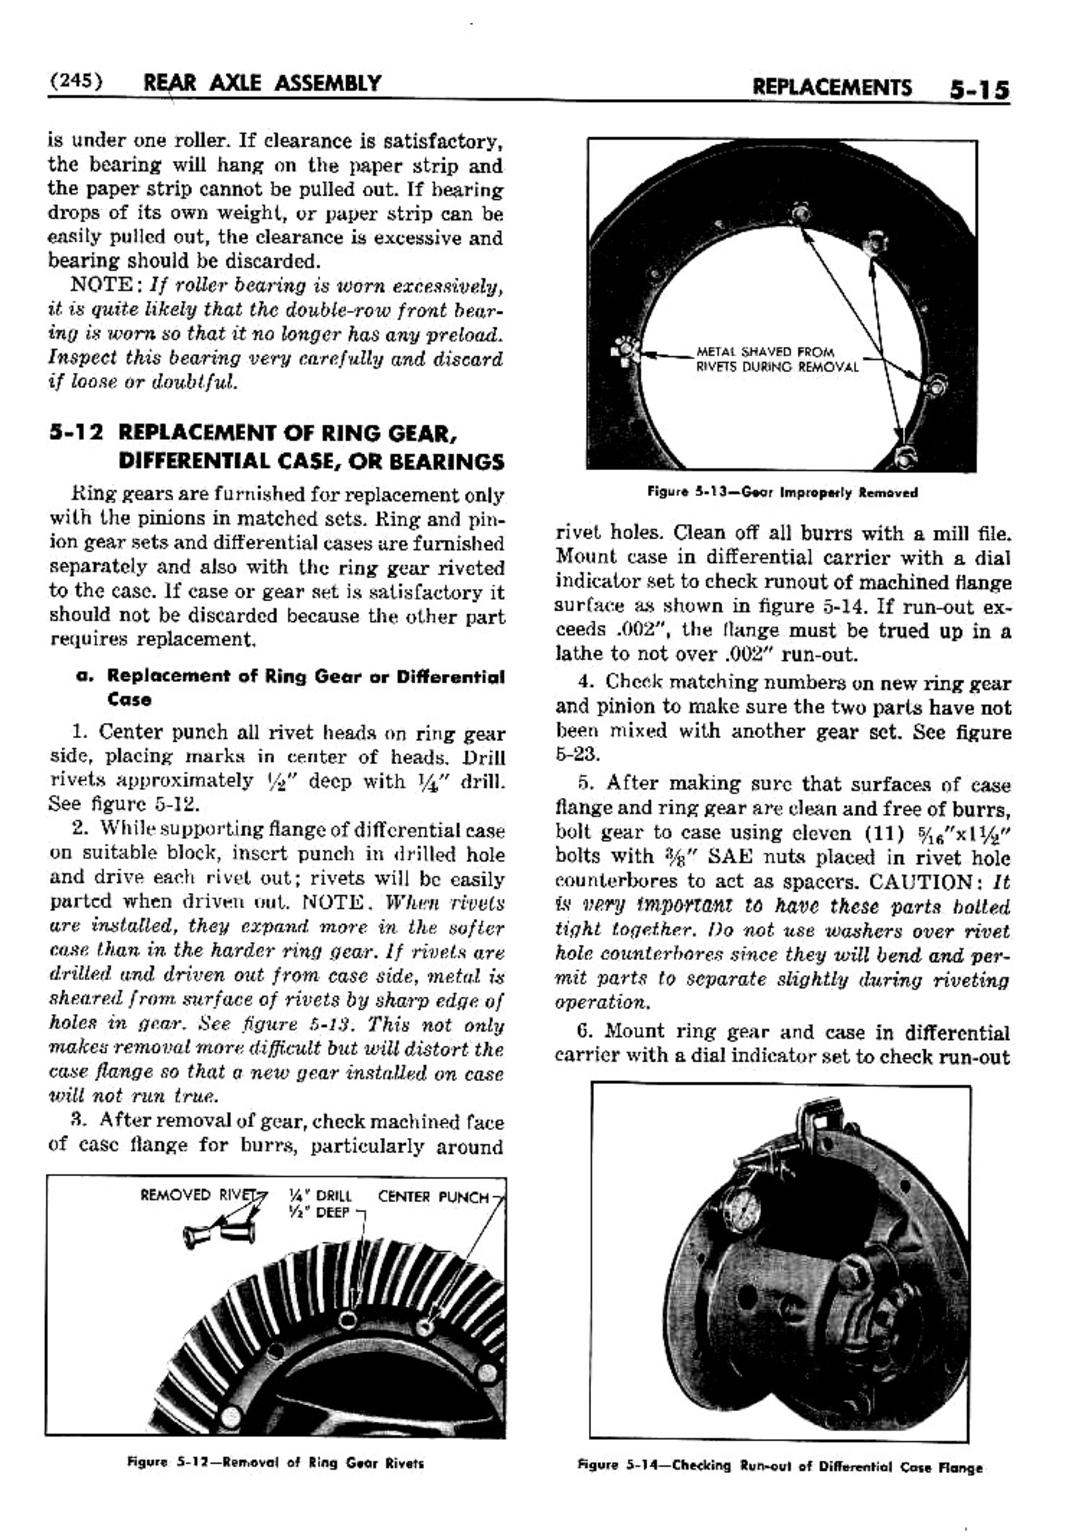 n_06 1952 Buick Shop Manual - Rear Axle-015-015.jpg